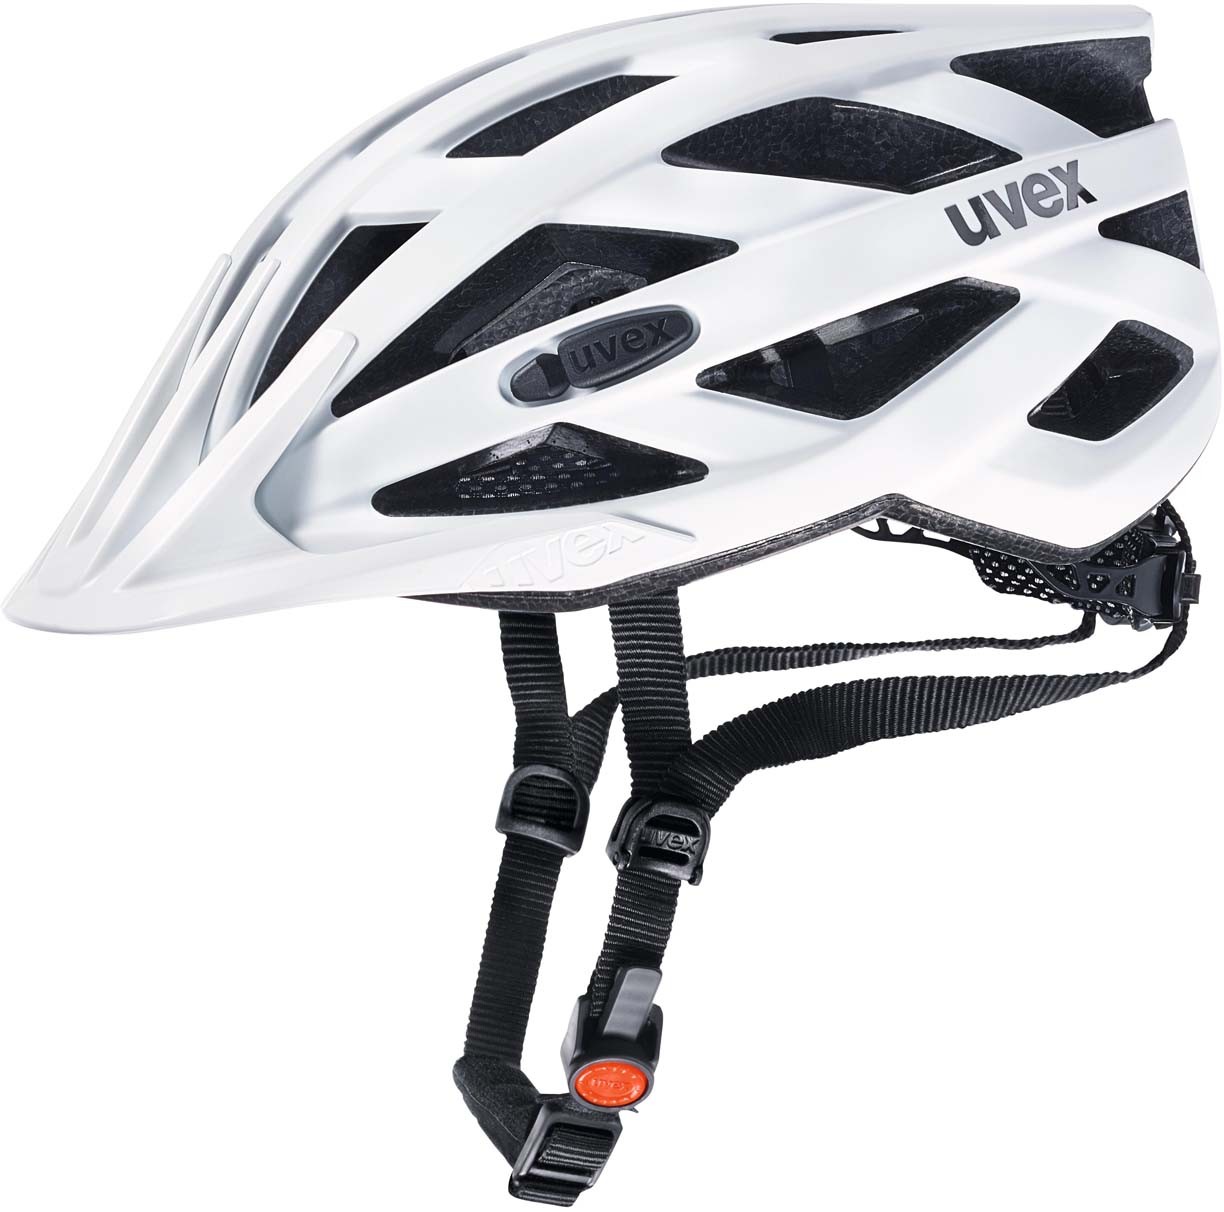 Uvex i-vo cc bike helmet